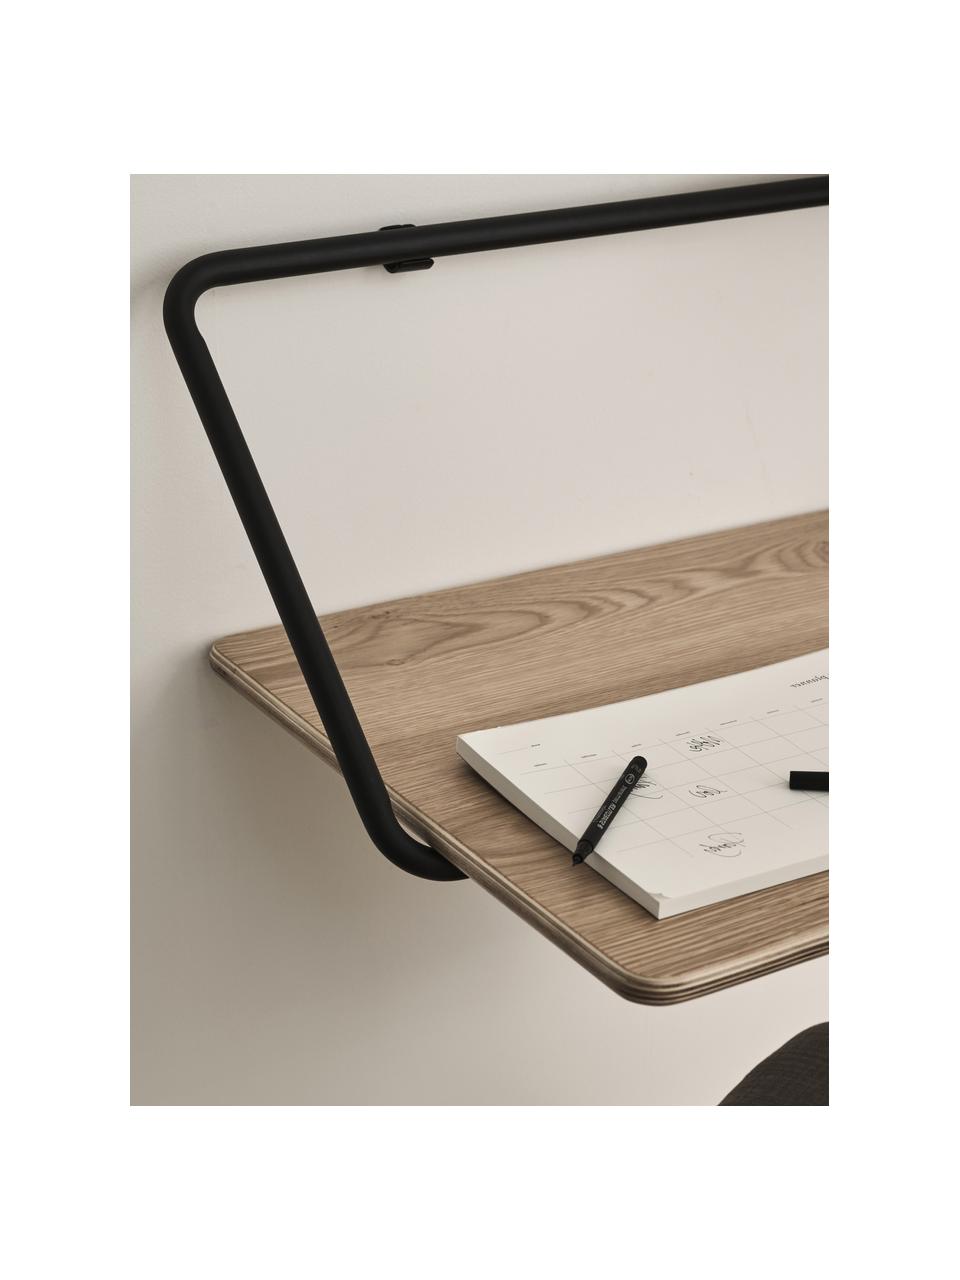 Wand-Schreibtisch Penny aus Holz in Schwarz, Tischplatte: Sperrholz, Eschenholzfurn, Rahmen: Metall, pulverbeschichtet, Sperrholz, B 100 x T 50 cm